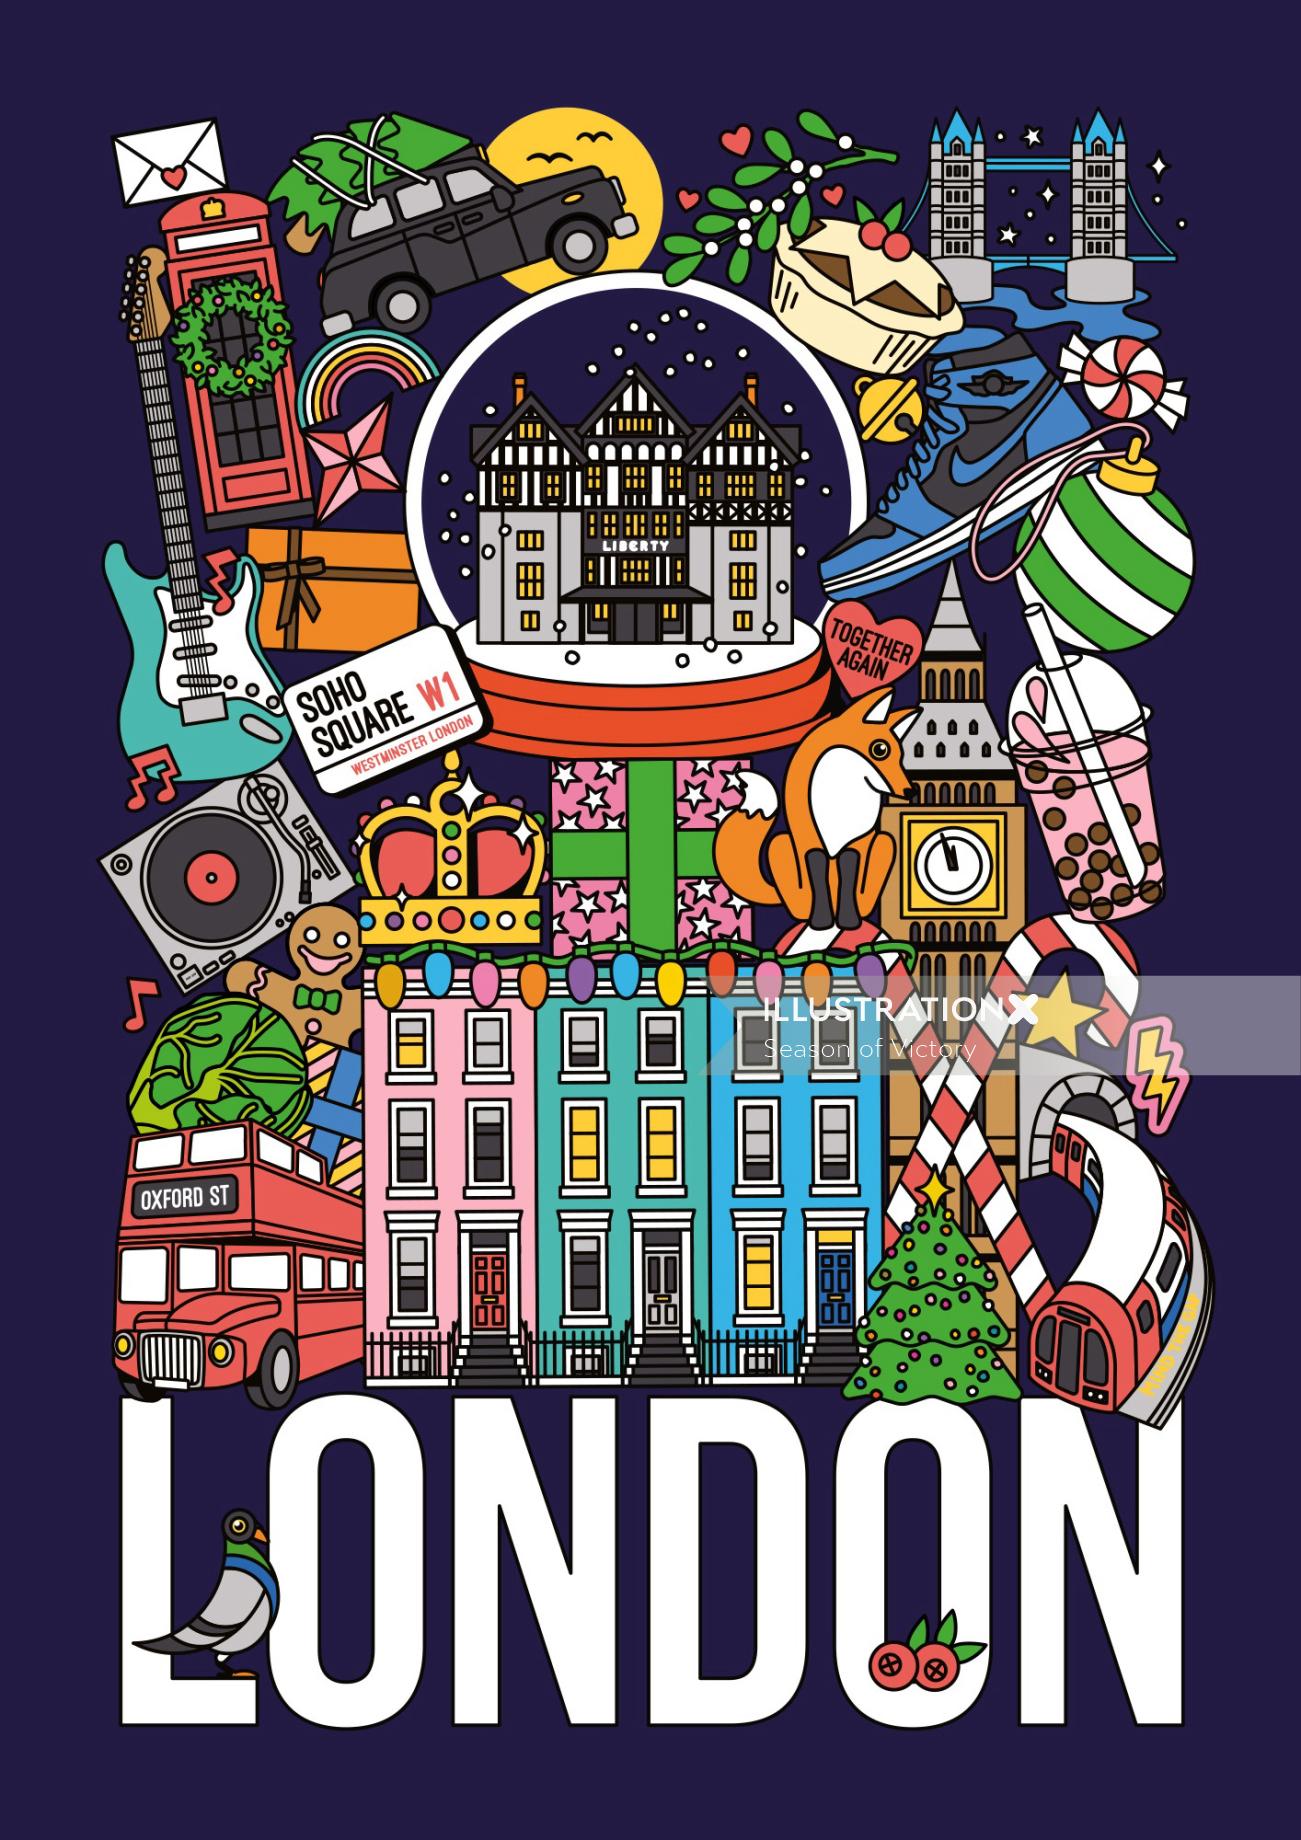 London at Christmas – city scene poster illustration